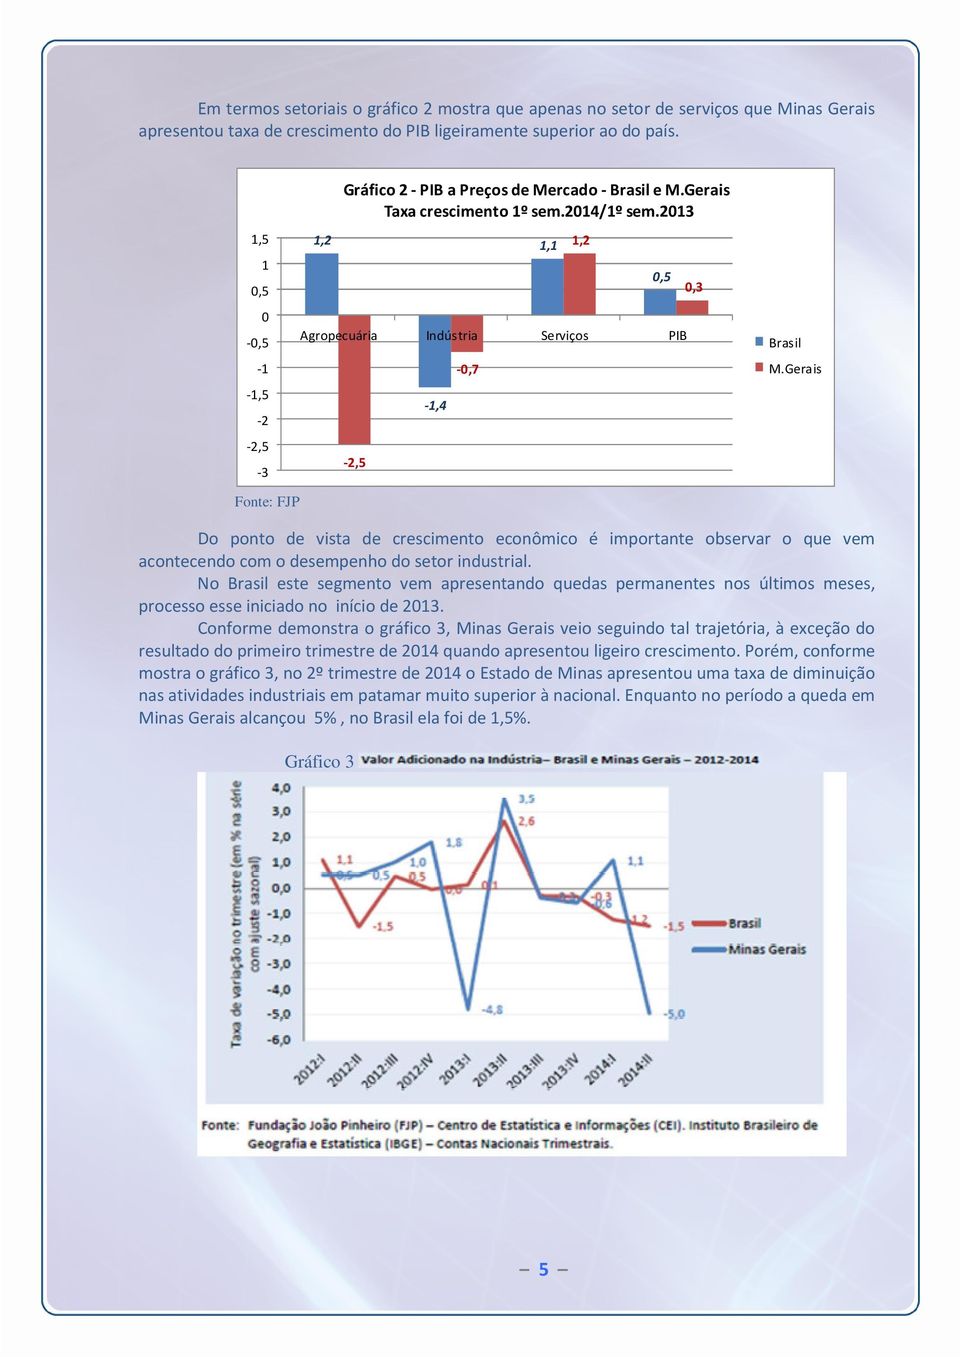 2013 Agropecuária Indústria Serviços PIB -2,5-1,4-0,7 1,1 1,2 0,5 0,3 Brasil M.